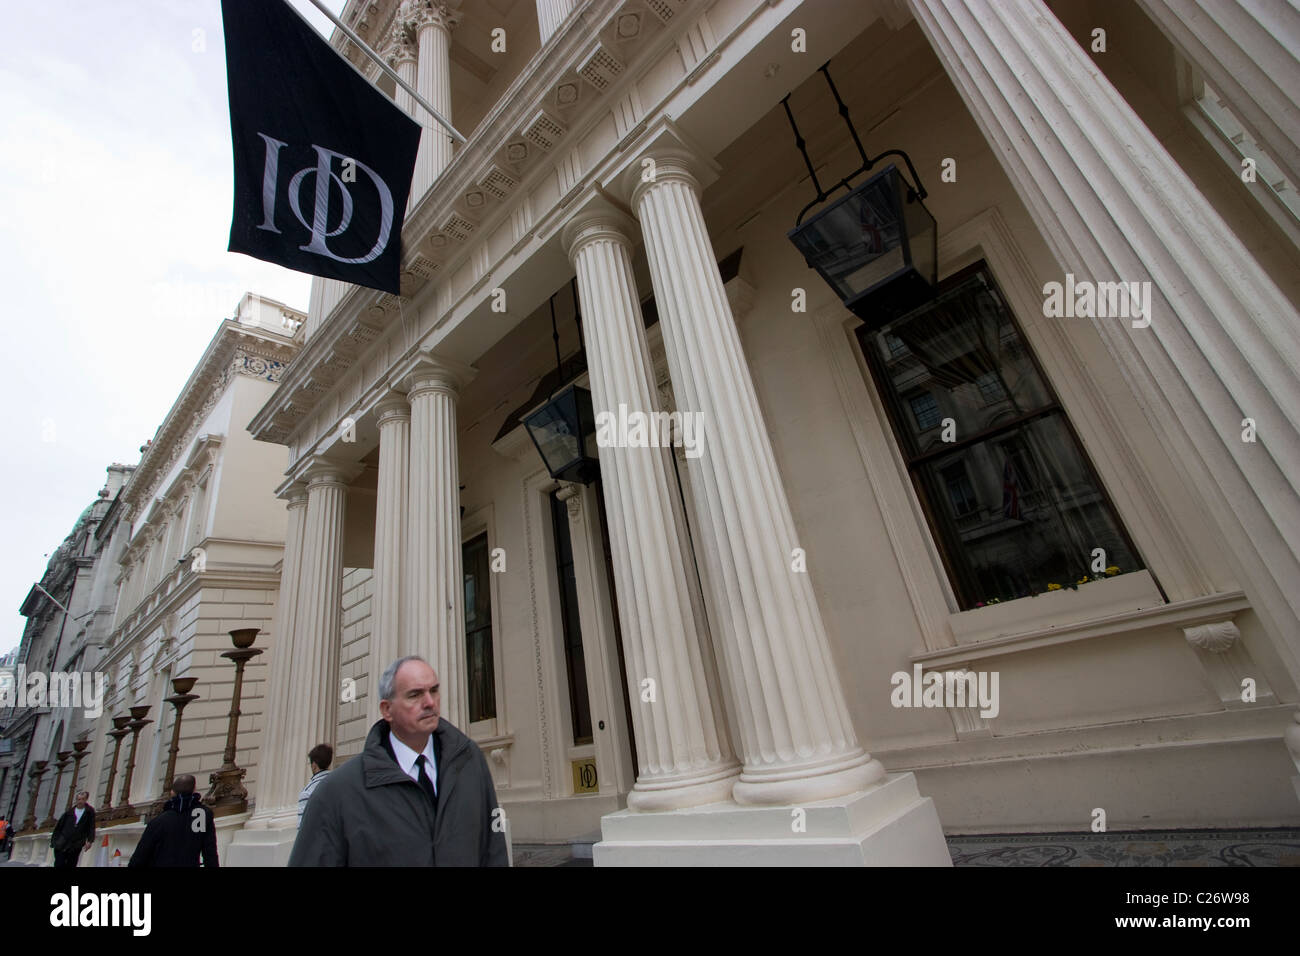 IOD institute of directors London Stock Photo